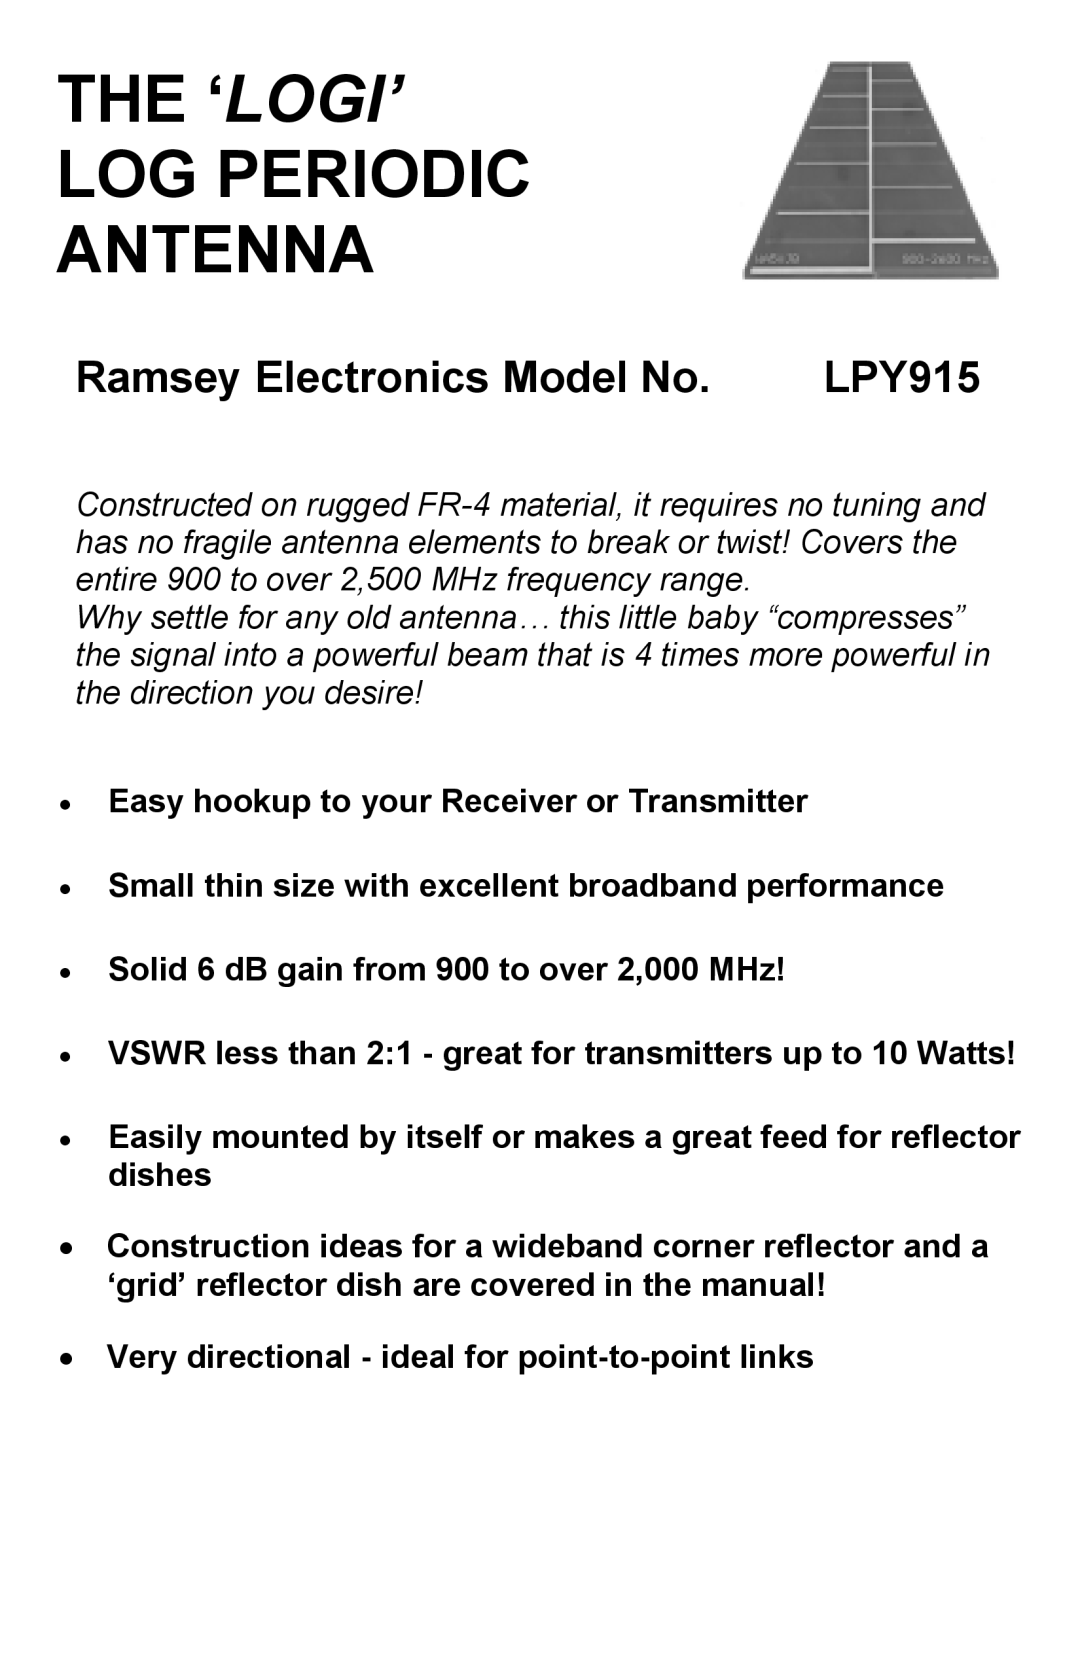 Ramsey Electronics LPY915 manual The ‘Logi’ Log Periodic Antenna, Ramsey Electronics Model No 